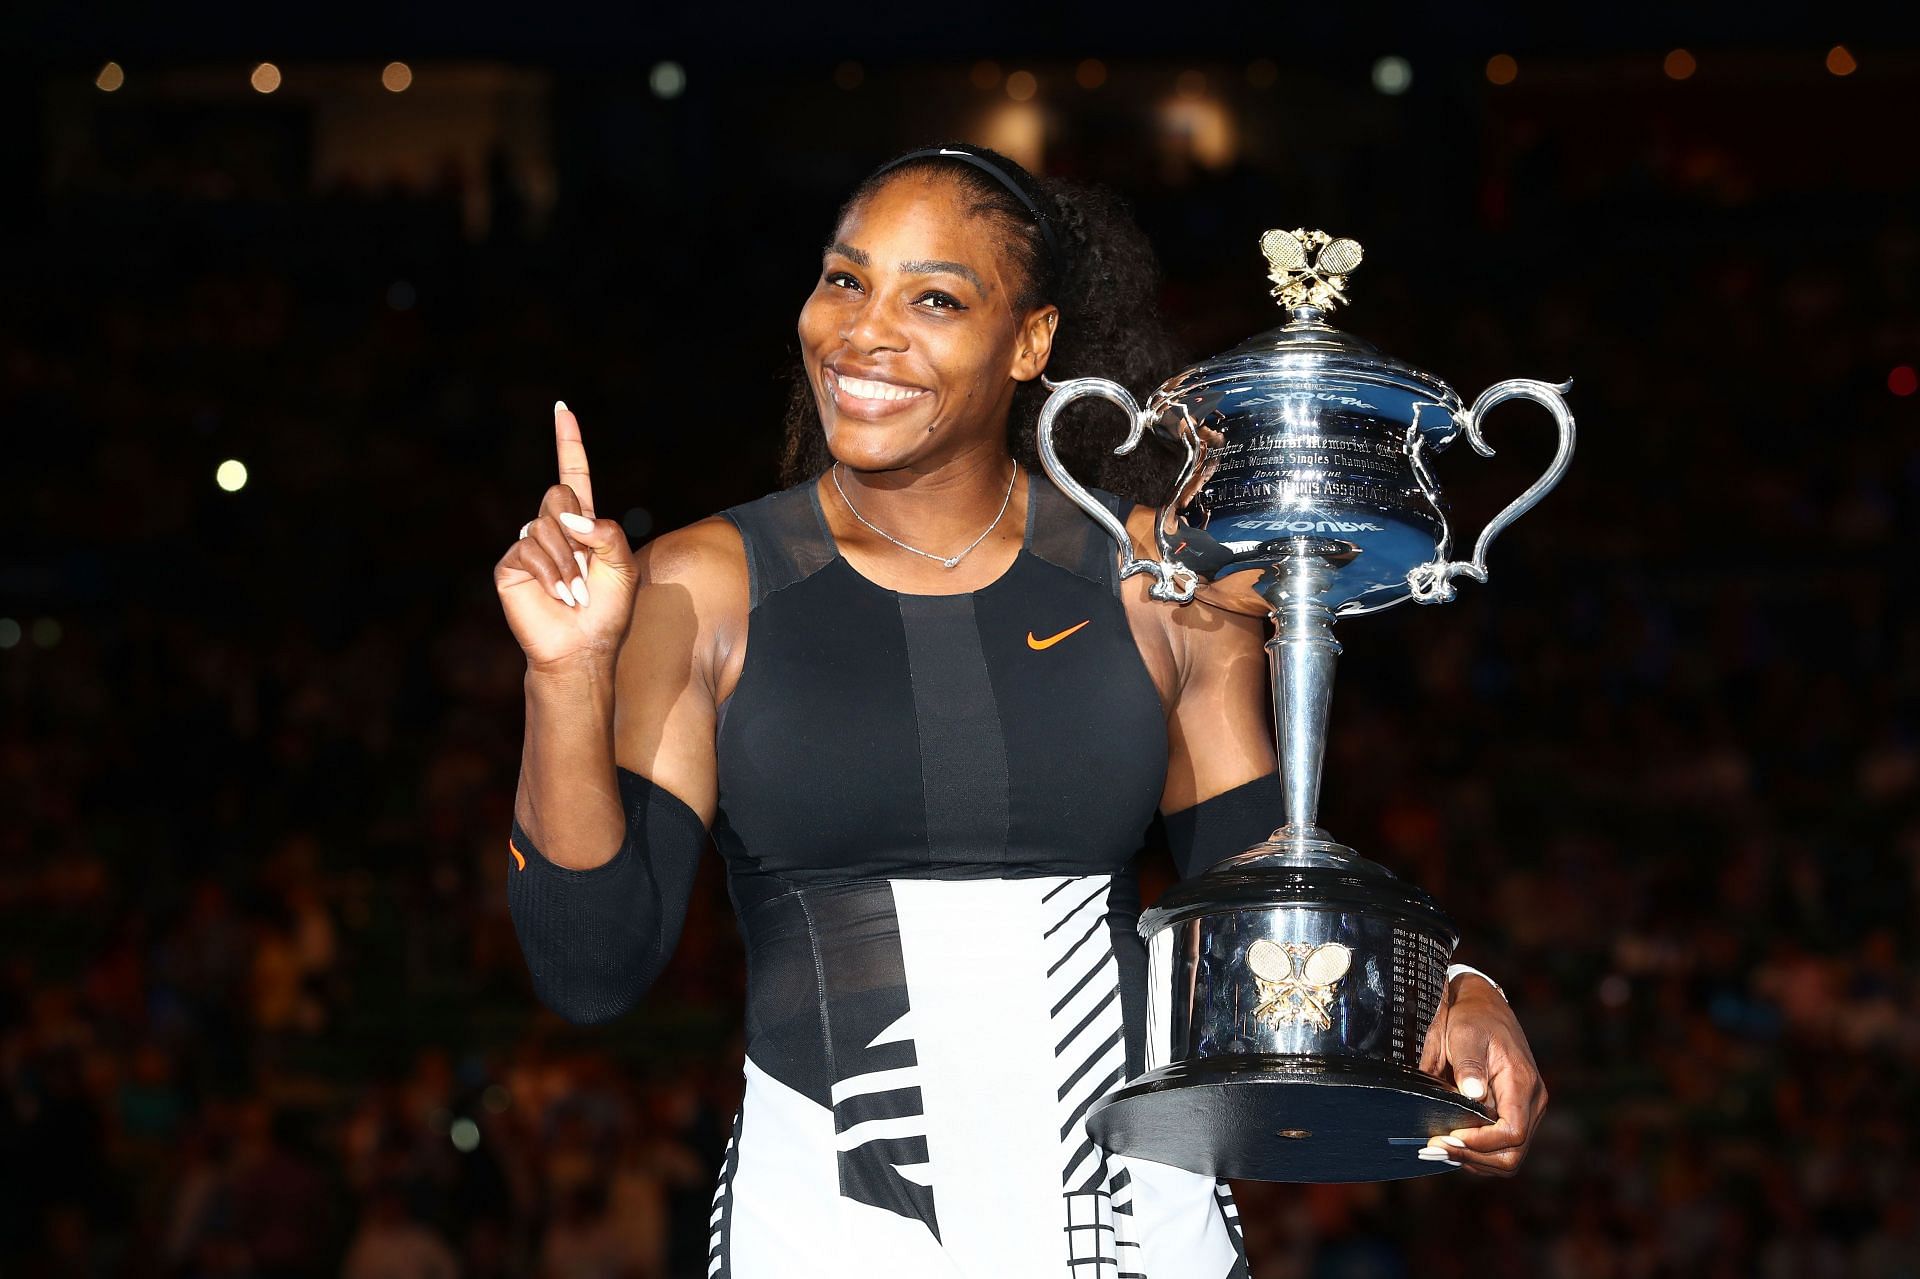 Serena Williams at the 2017 Australian Open